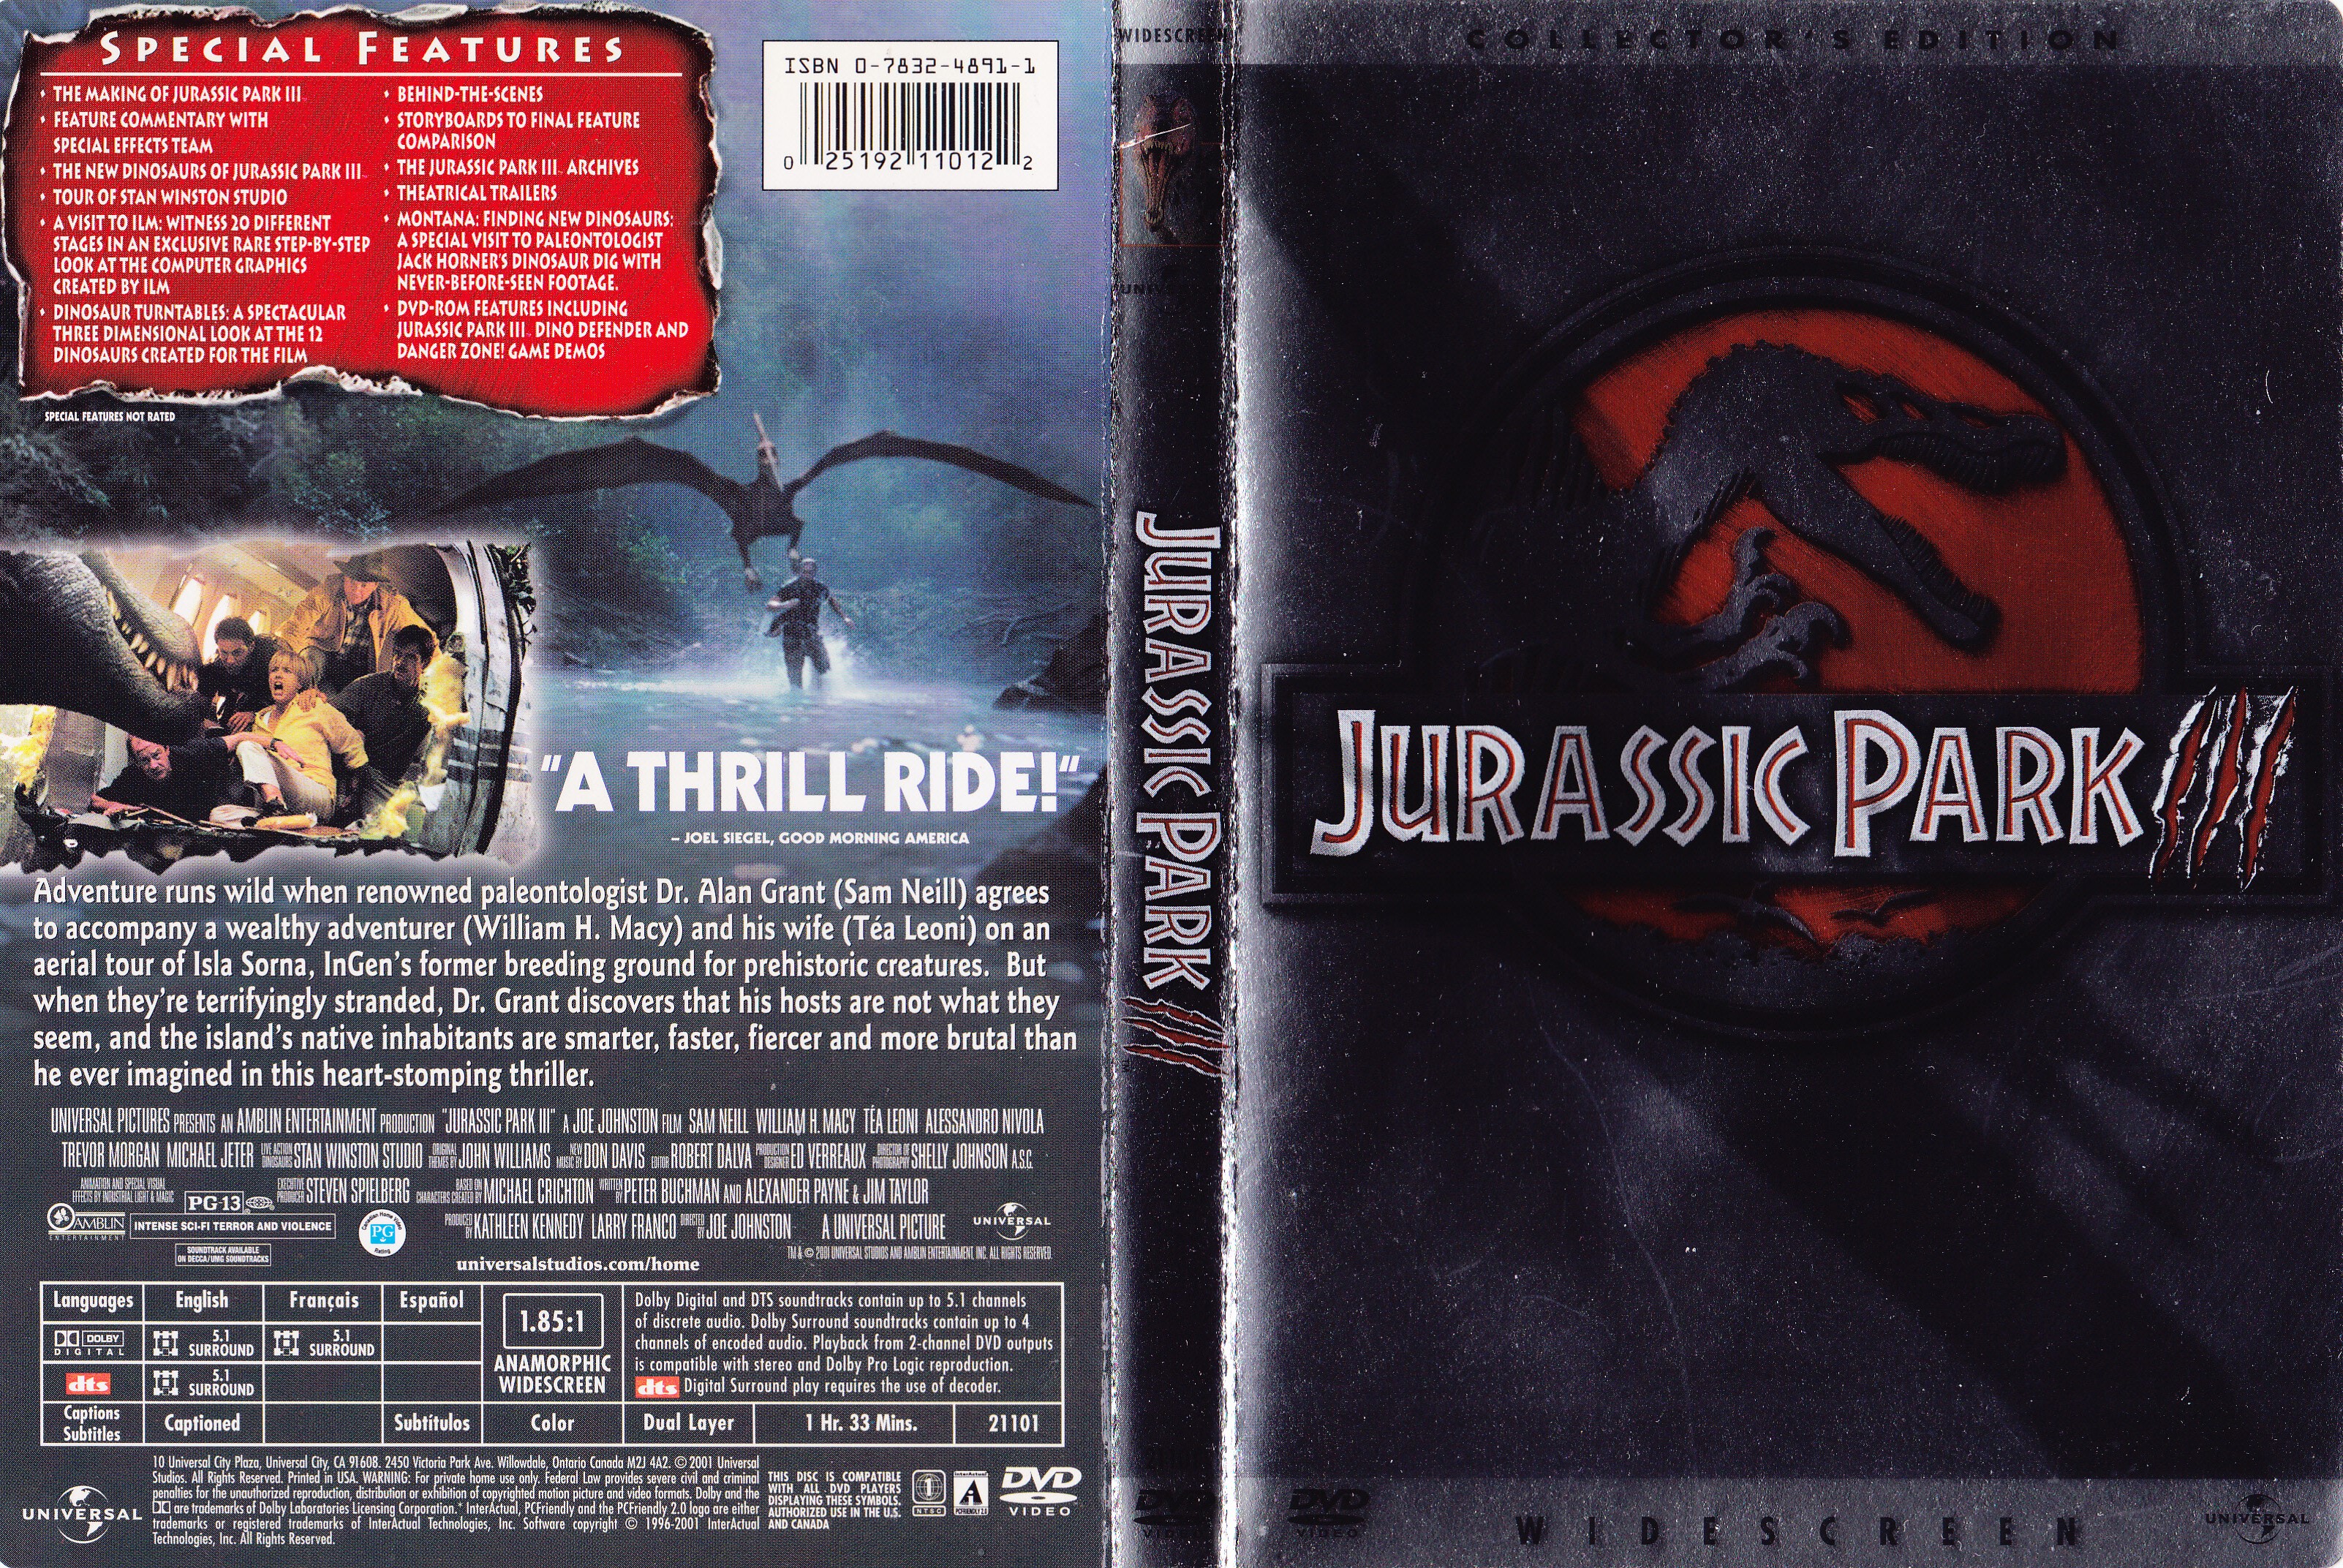 Jaquette DVD Jurassic park 3 (Canadienne)